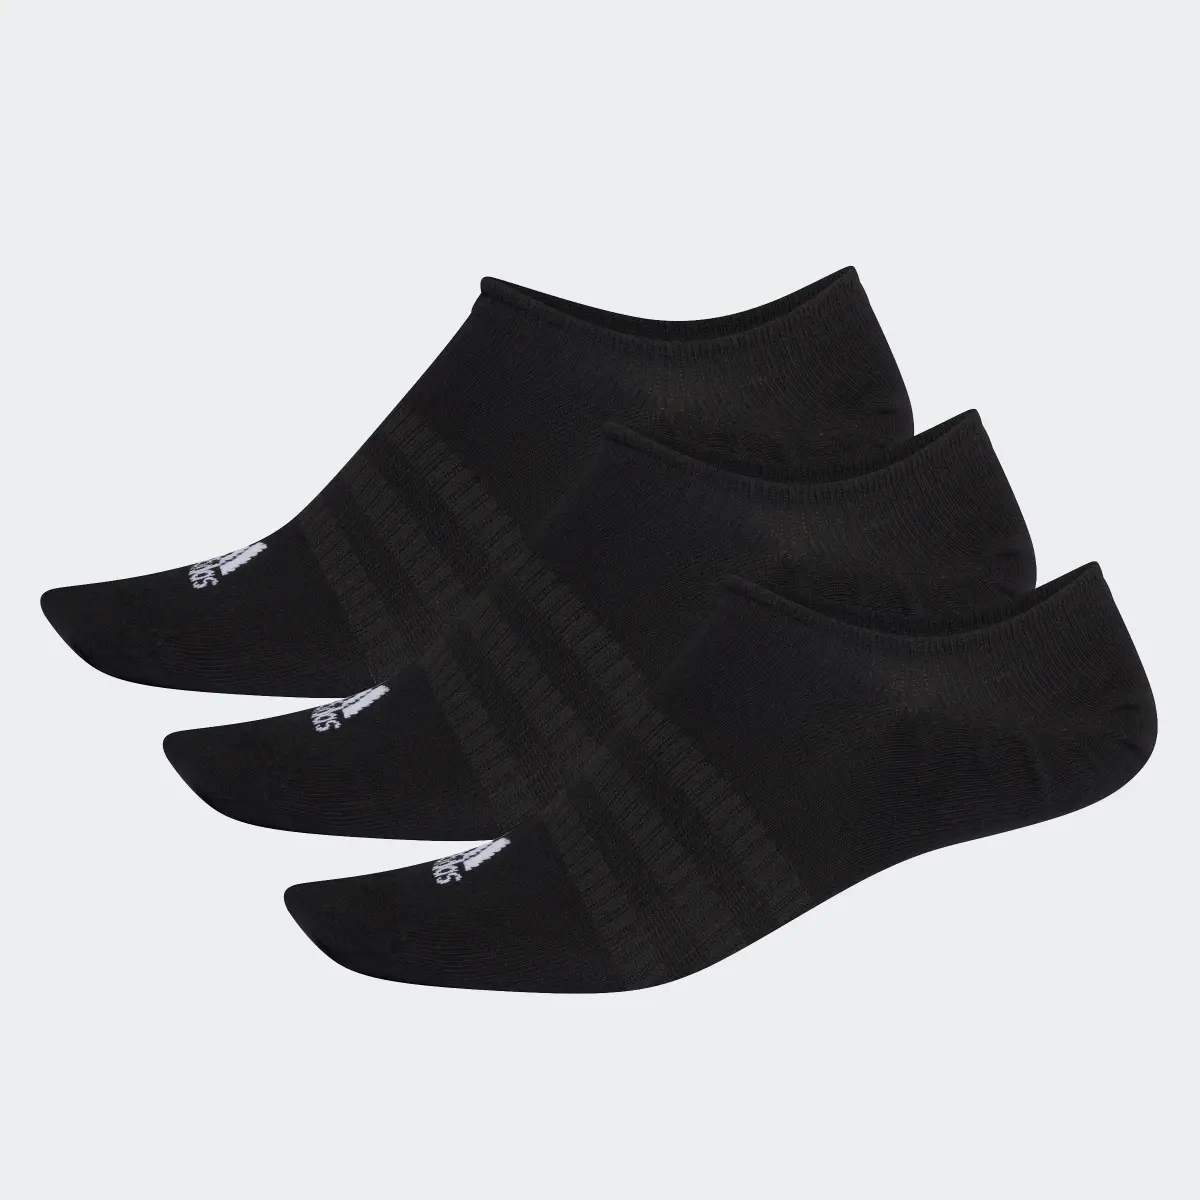 Adidas Socquettes invisibles (3 paires). 2